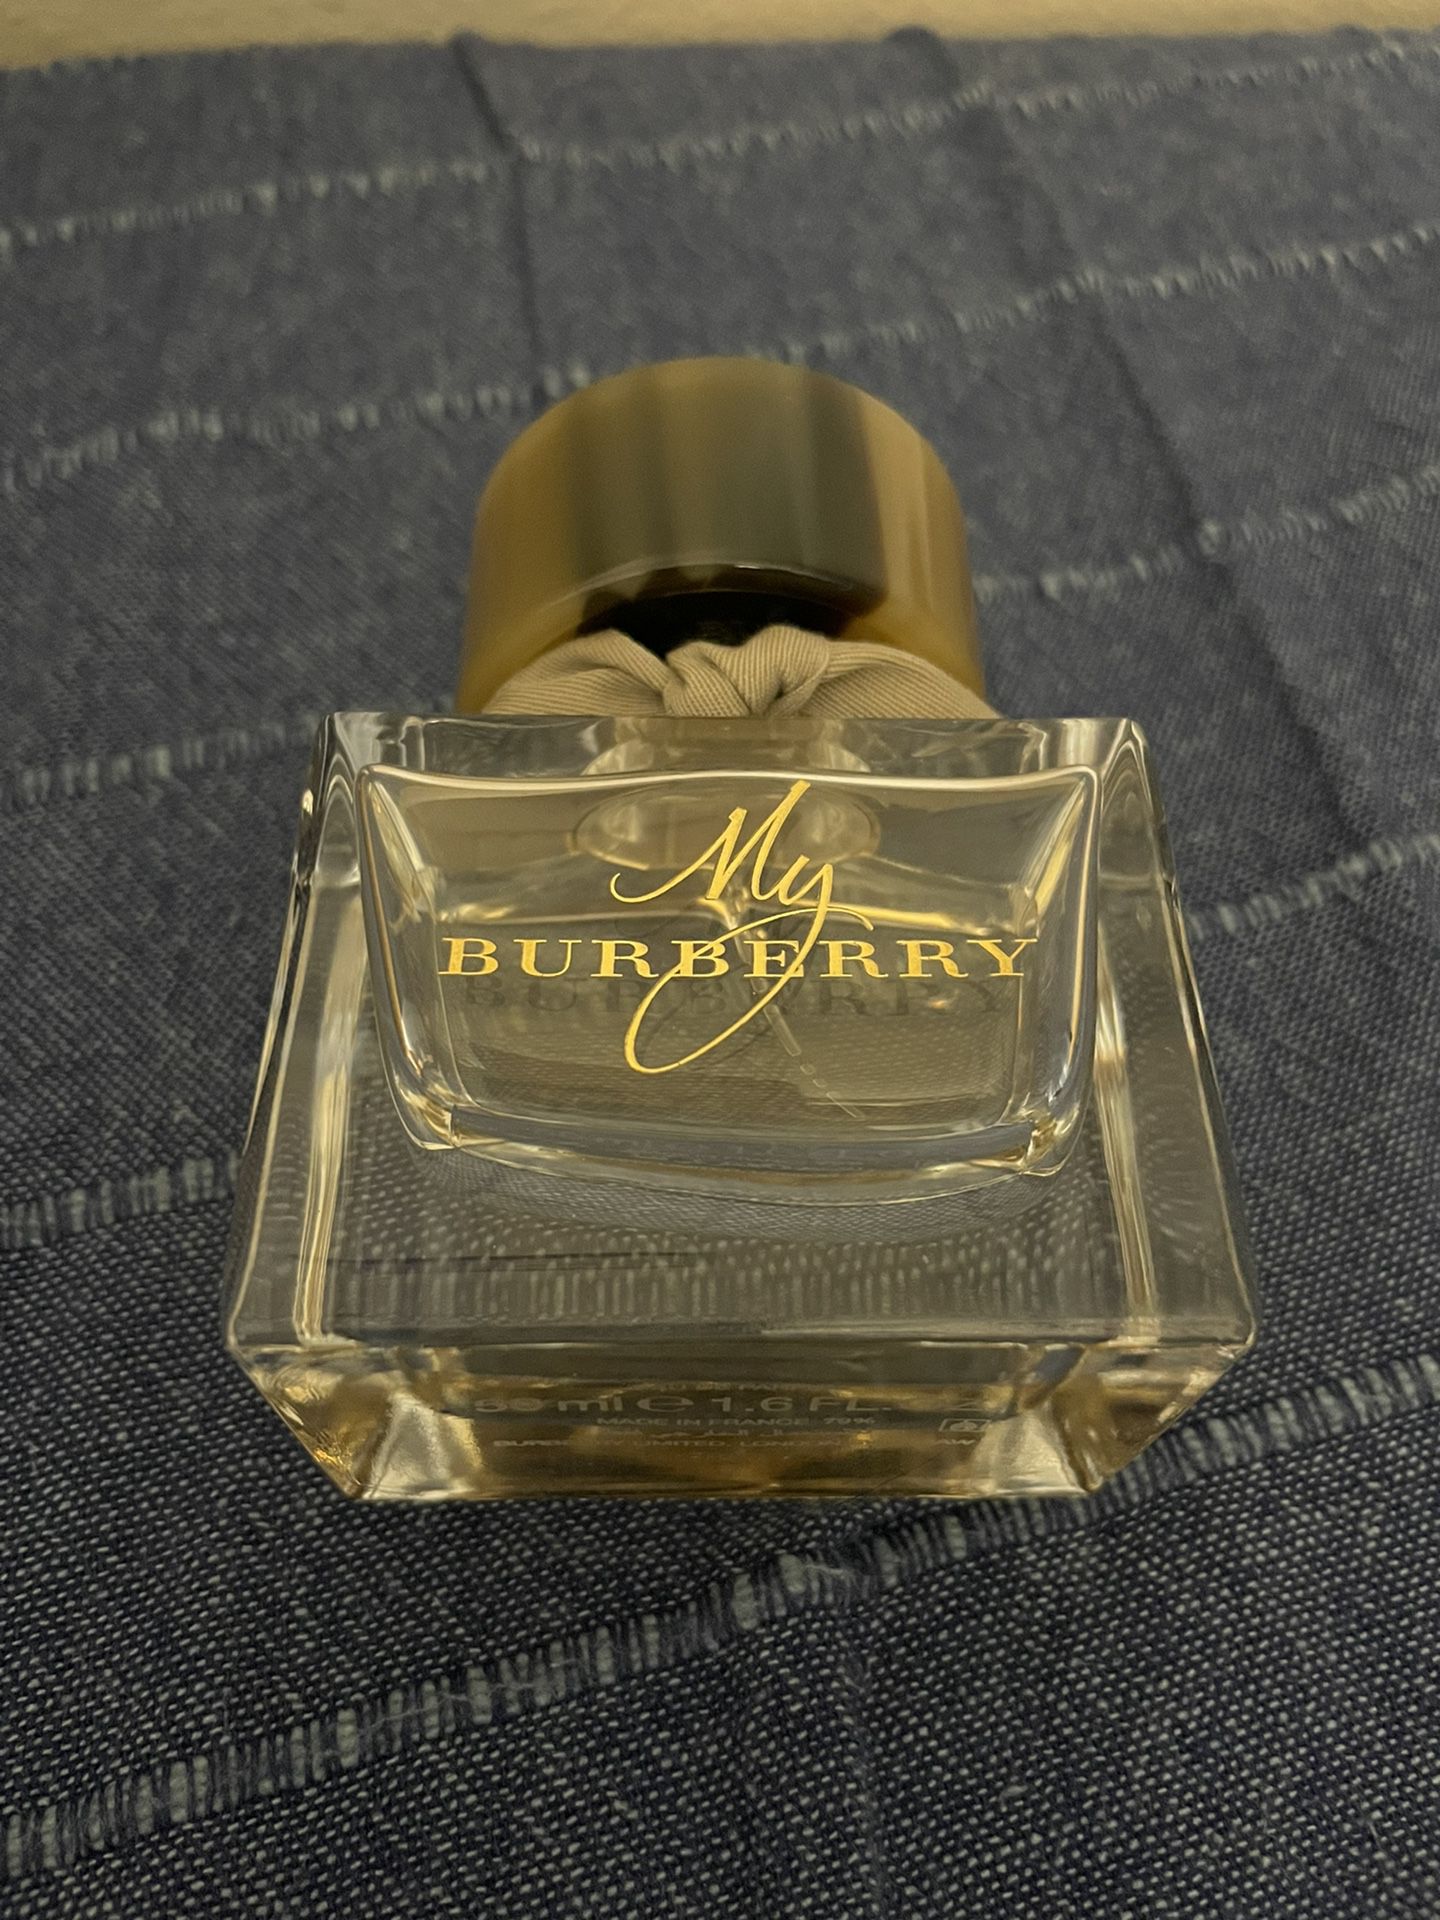 My Burberry Perfume 